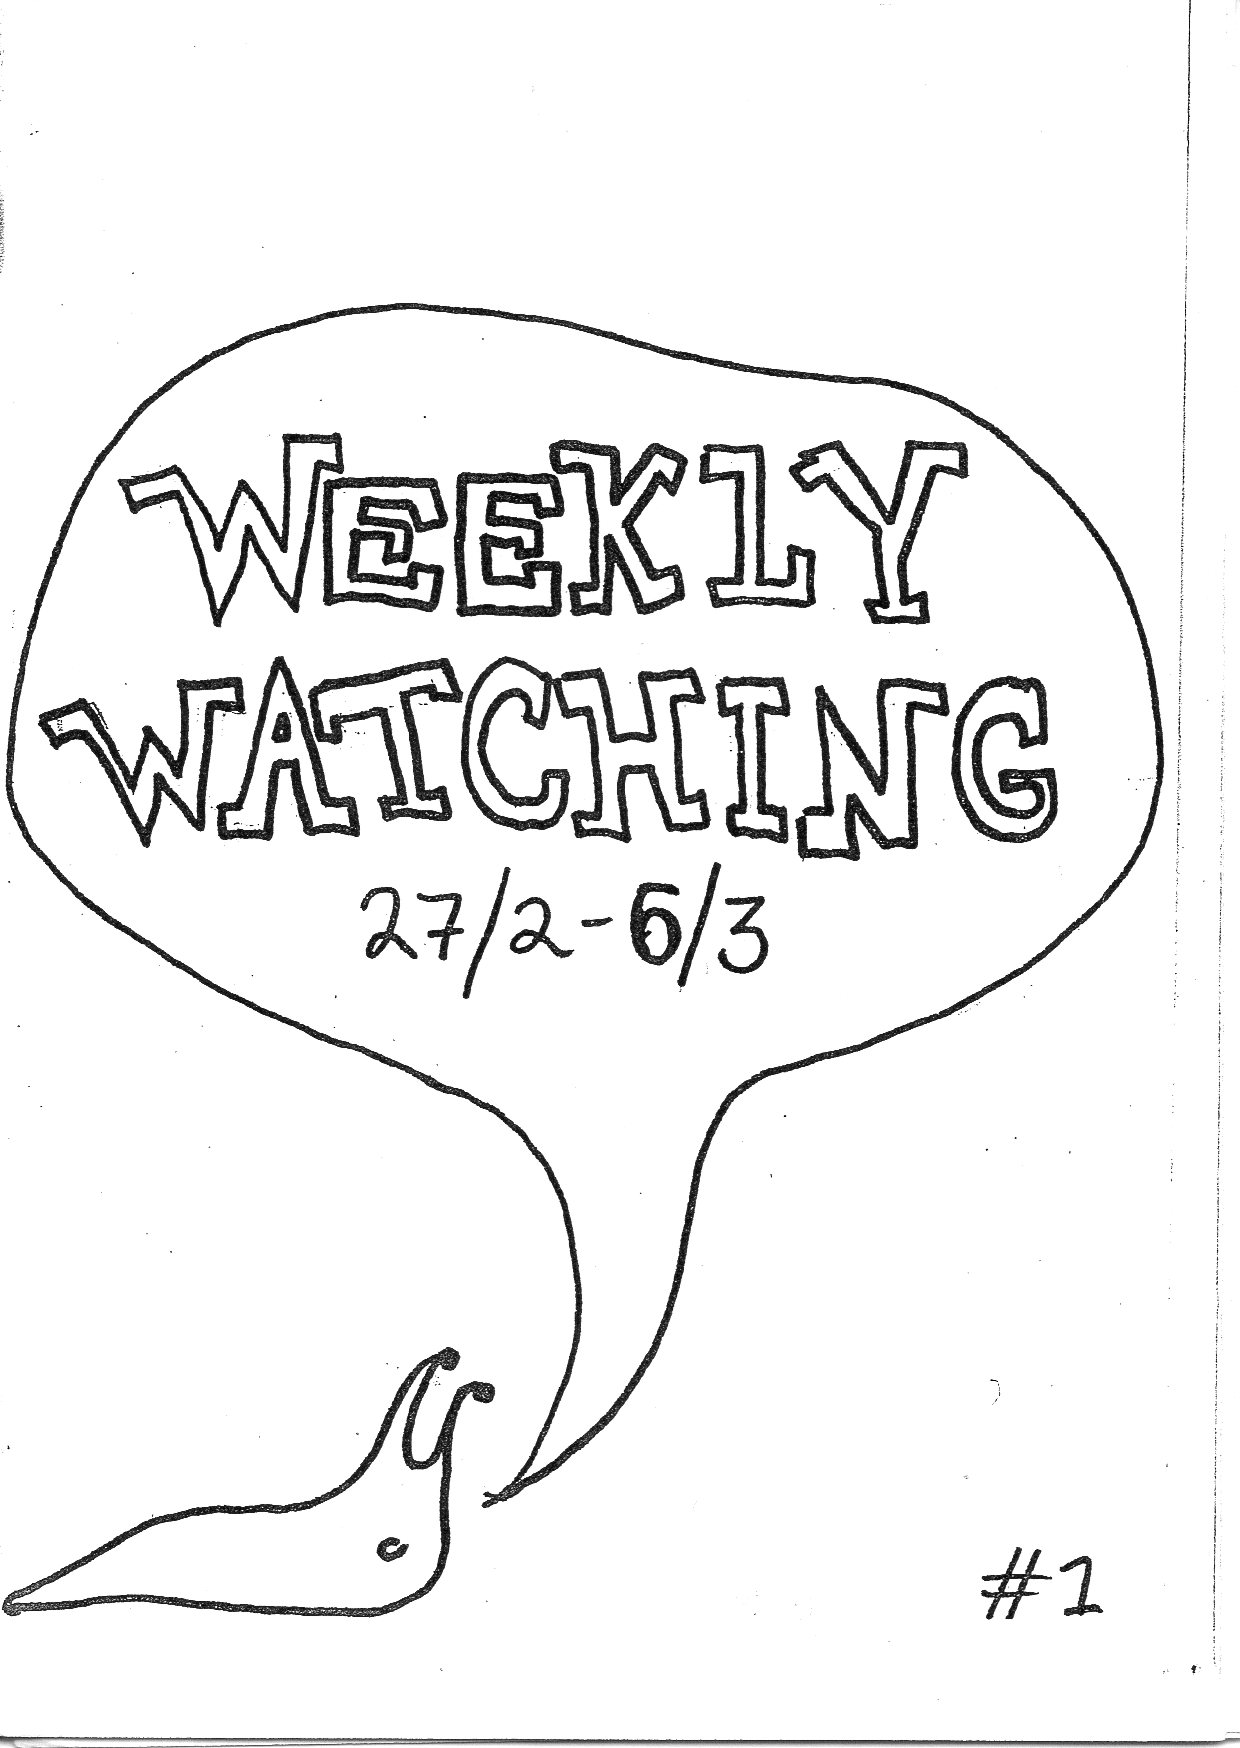 weeklywatching issue 1